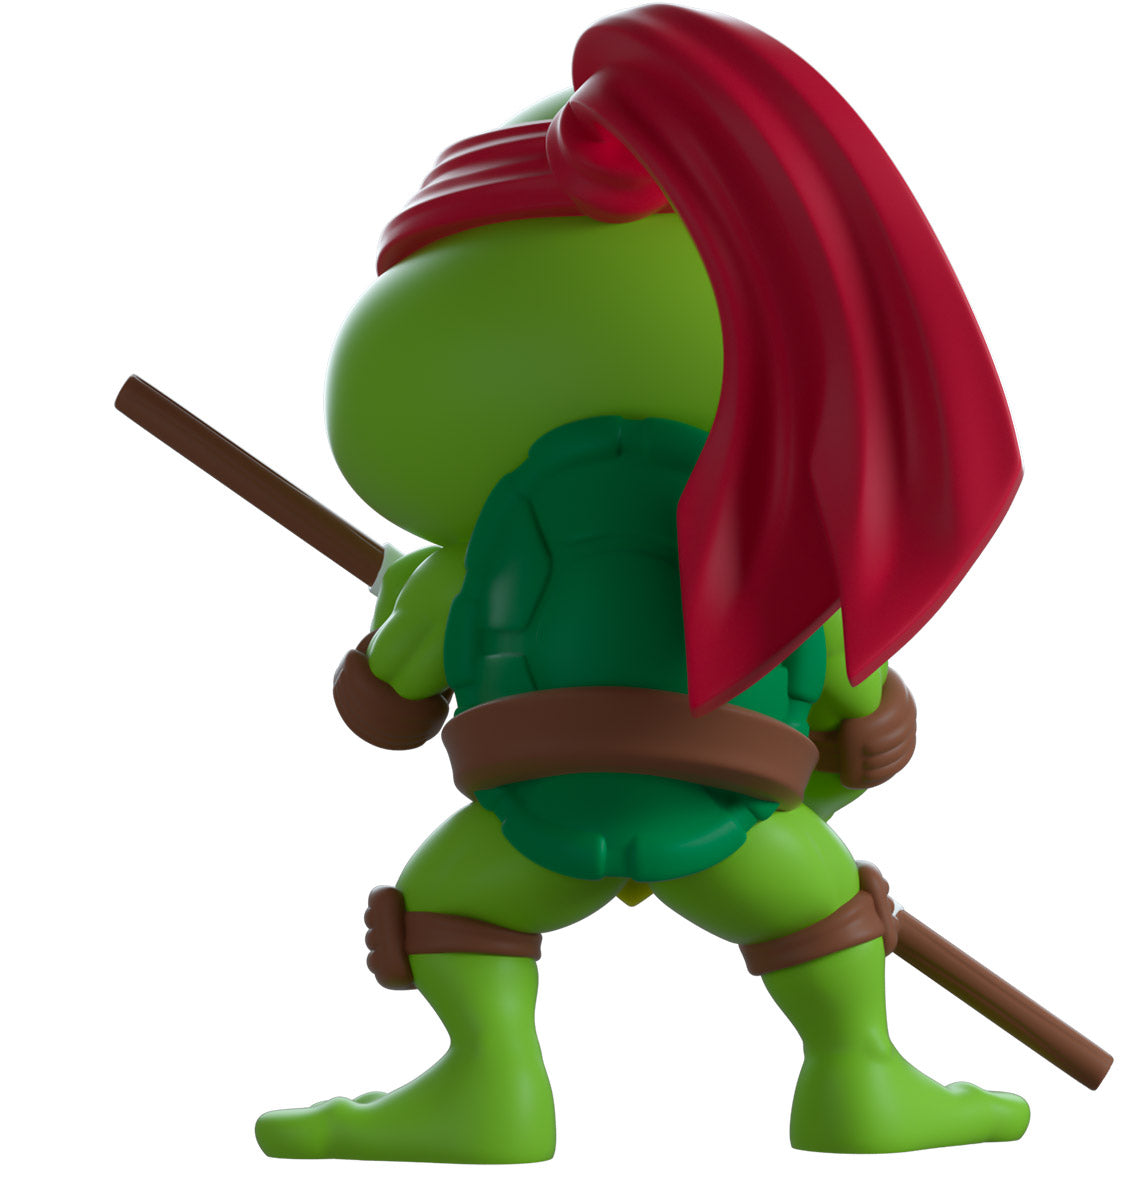 Youtooz Animation: TMNT Tortugas Ninja - Donatello Clasic